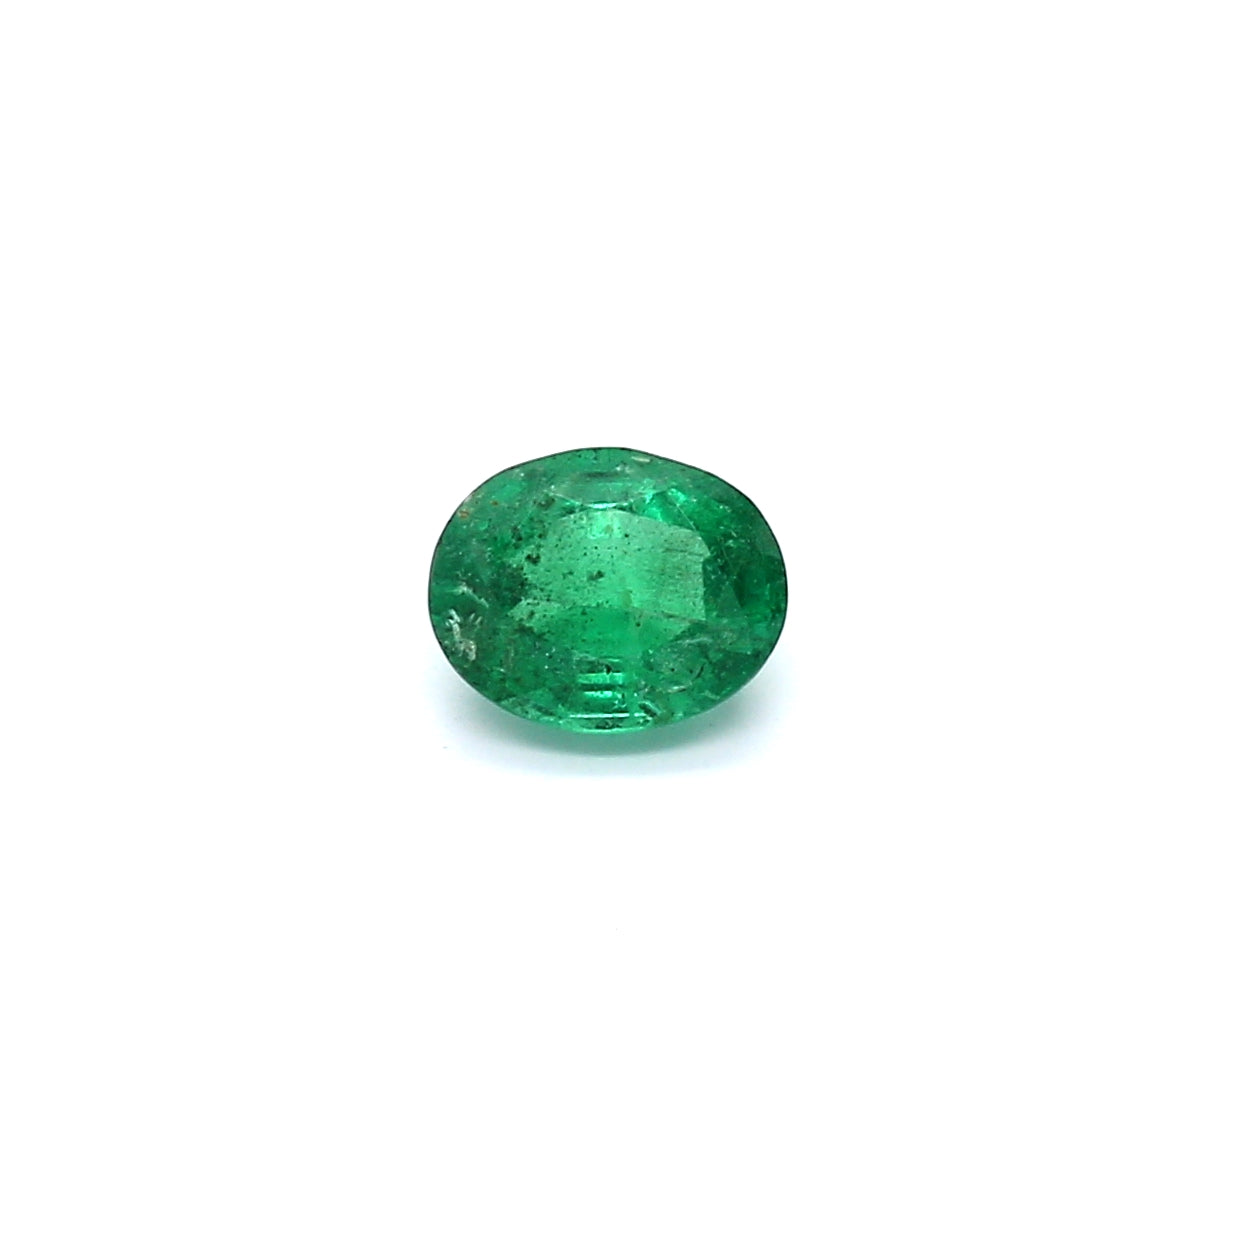 0.62ct Oval Emerald, Minor Oil, Zambia - 6.25 x 4.99 x 3.28mm